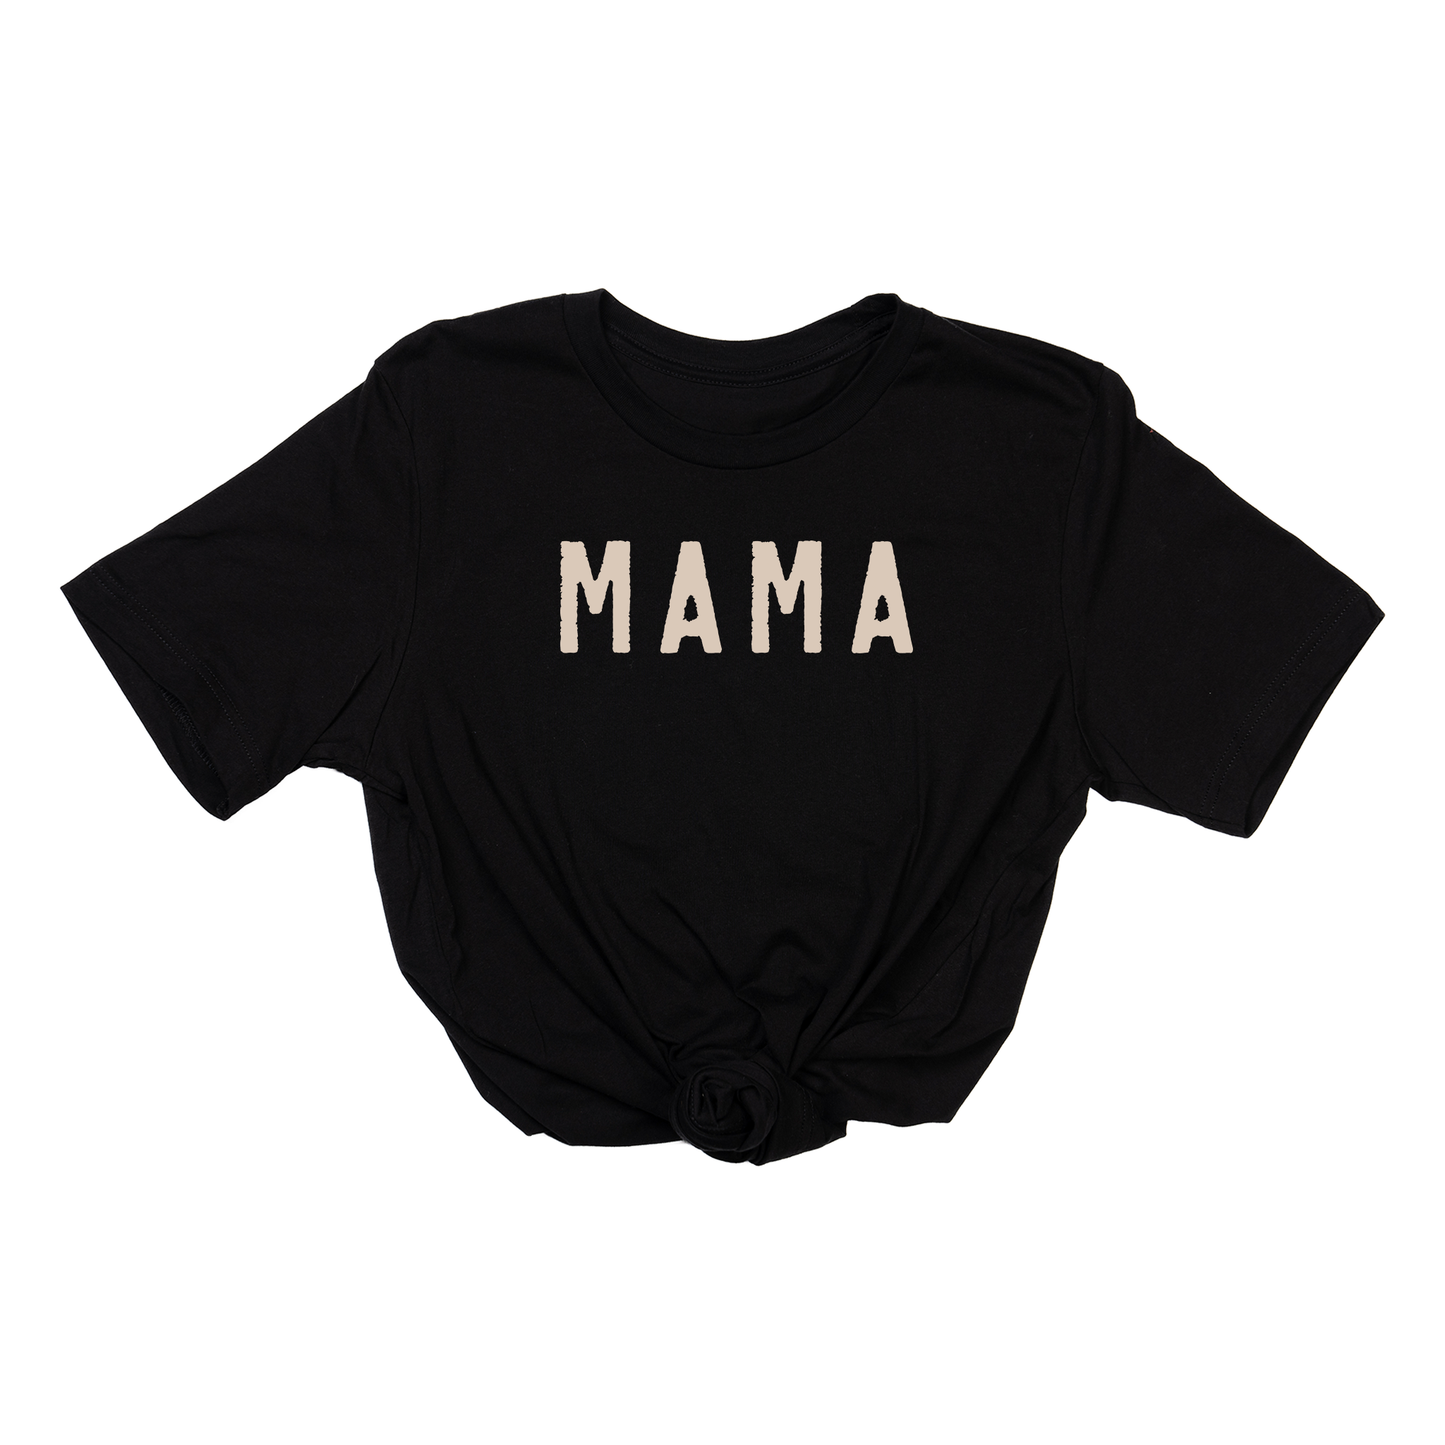 Mama (Rough,  Stone) - Tee (Black)